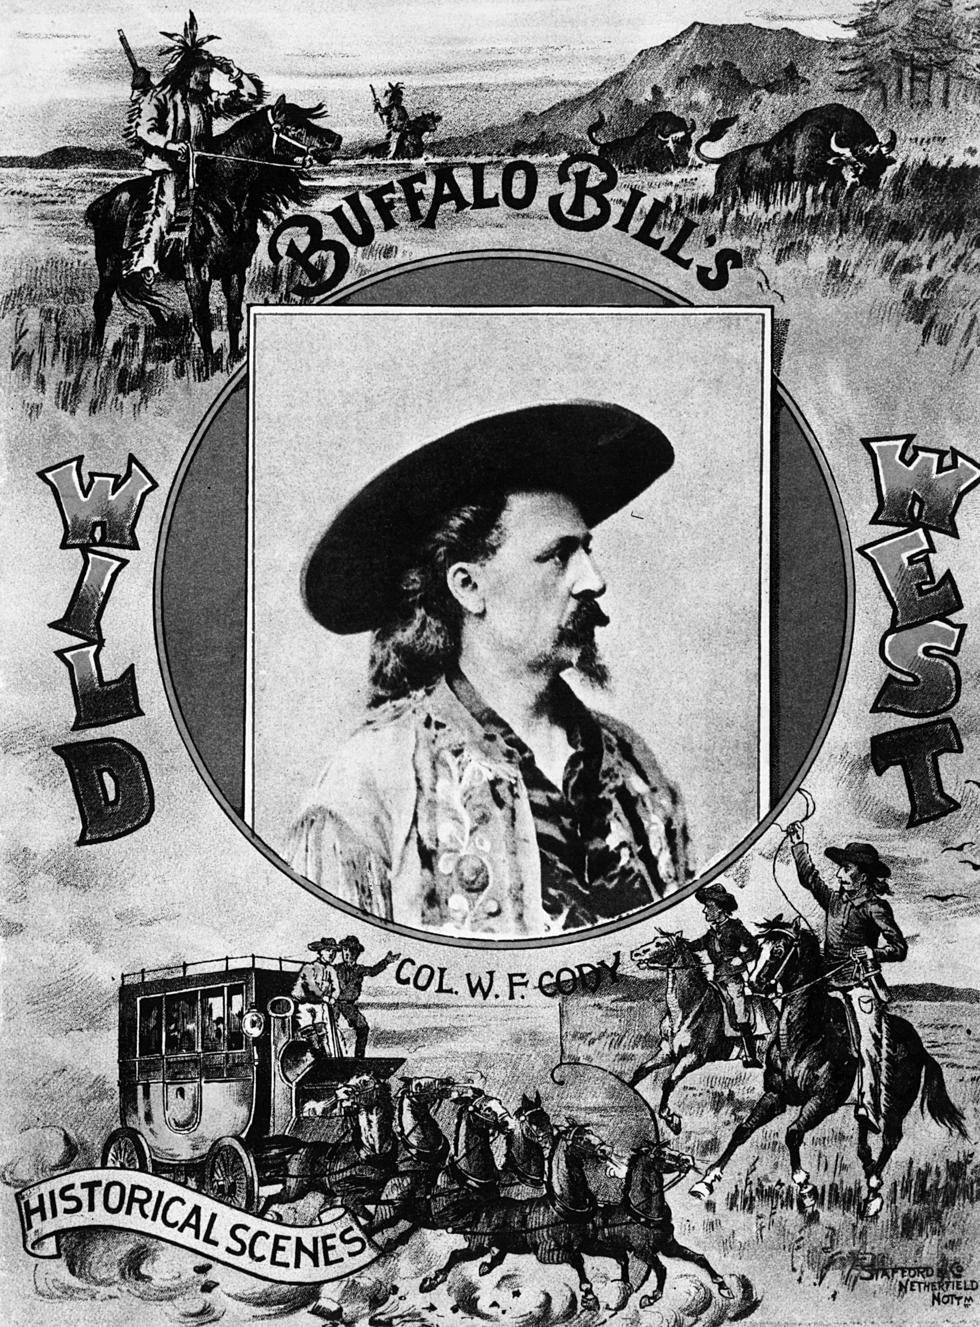 See Buffalo Bill Boycott’s Western Show at the Laramie County Library